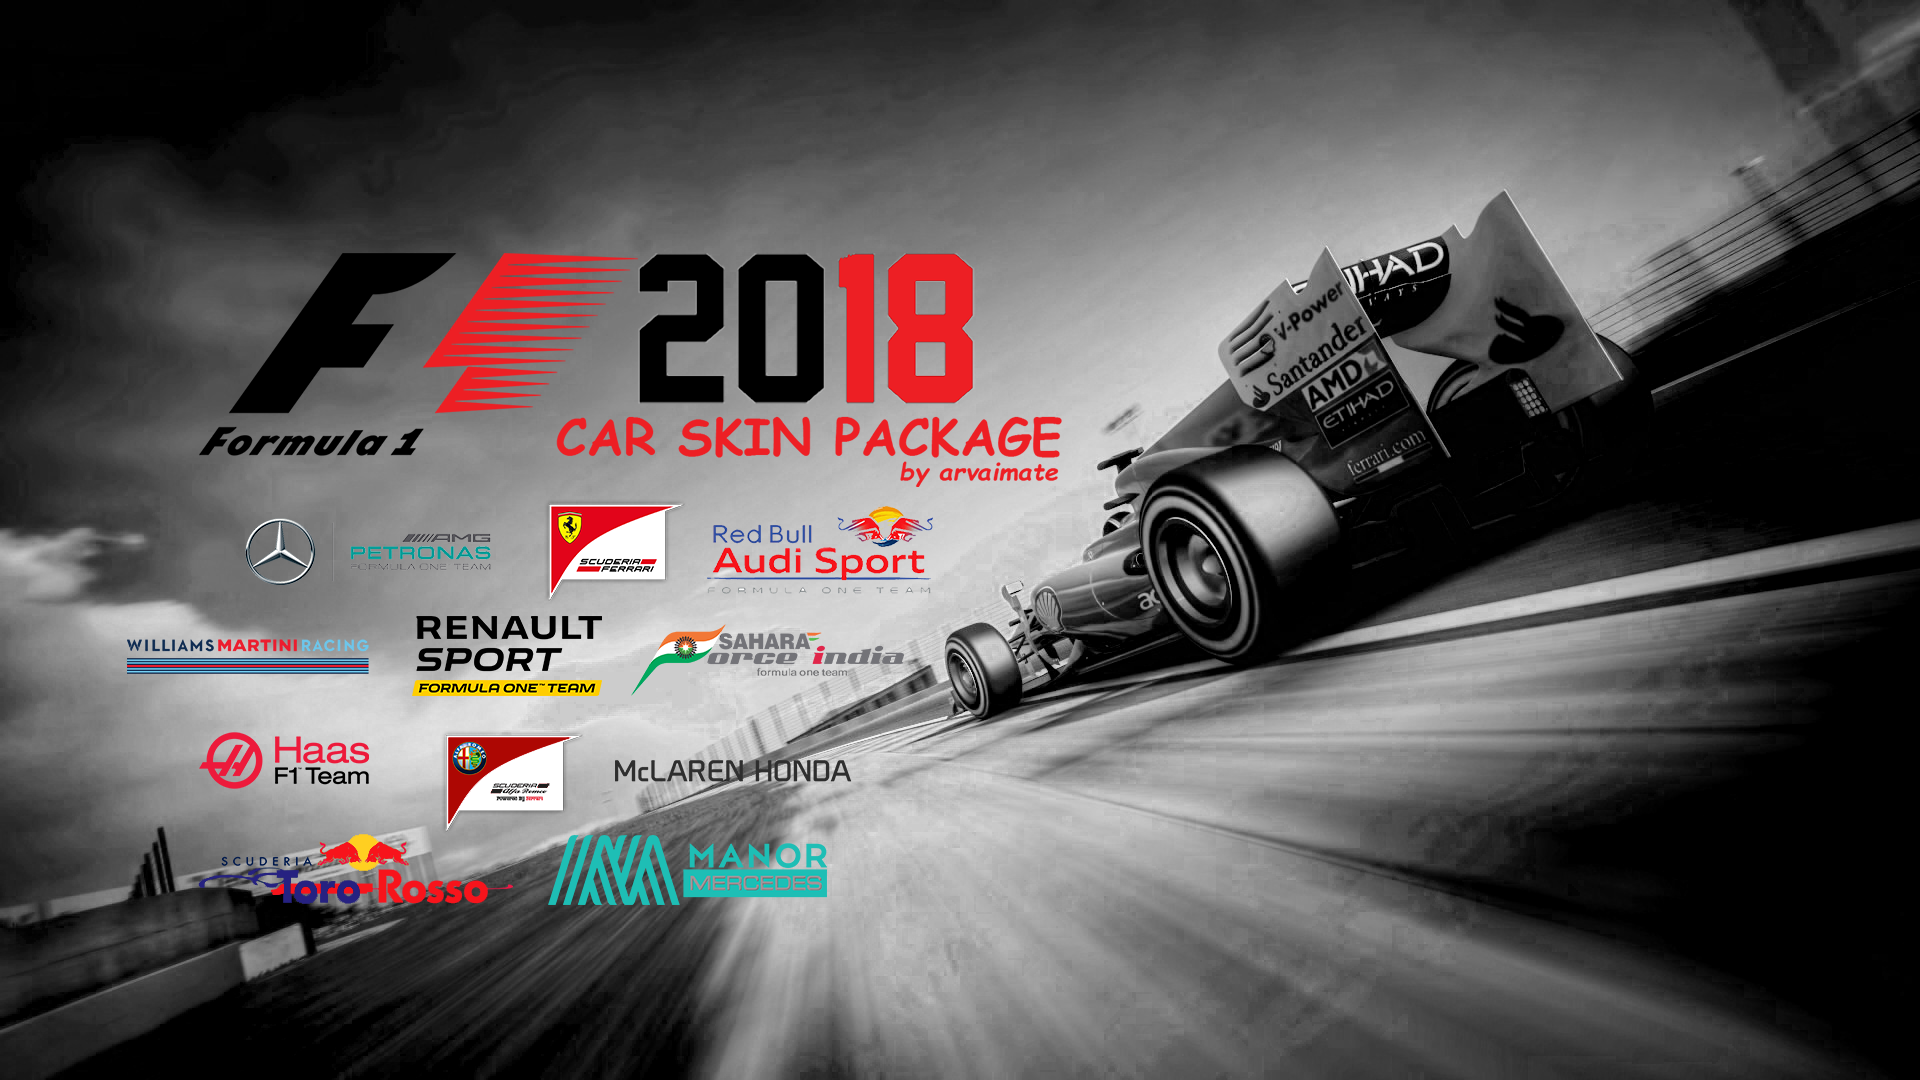 F1 2018 CAR SKIN PACKAGE.png